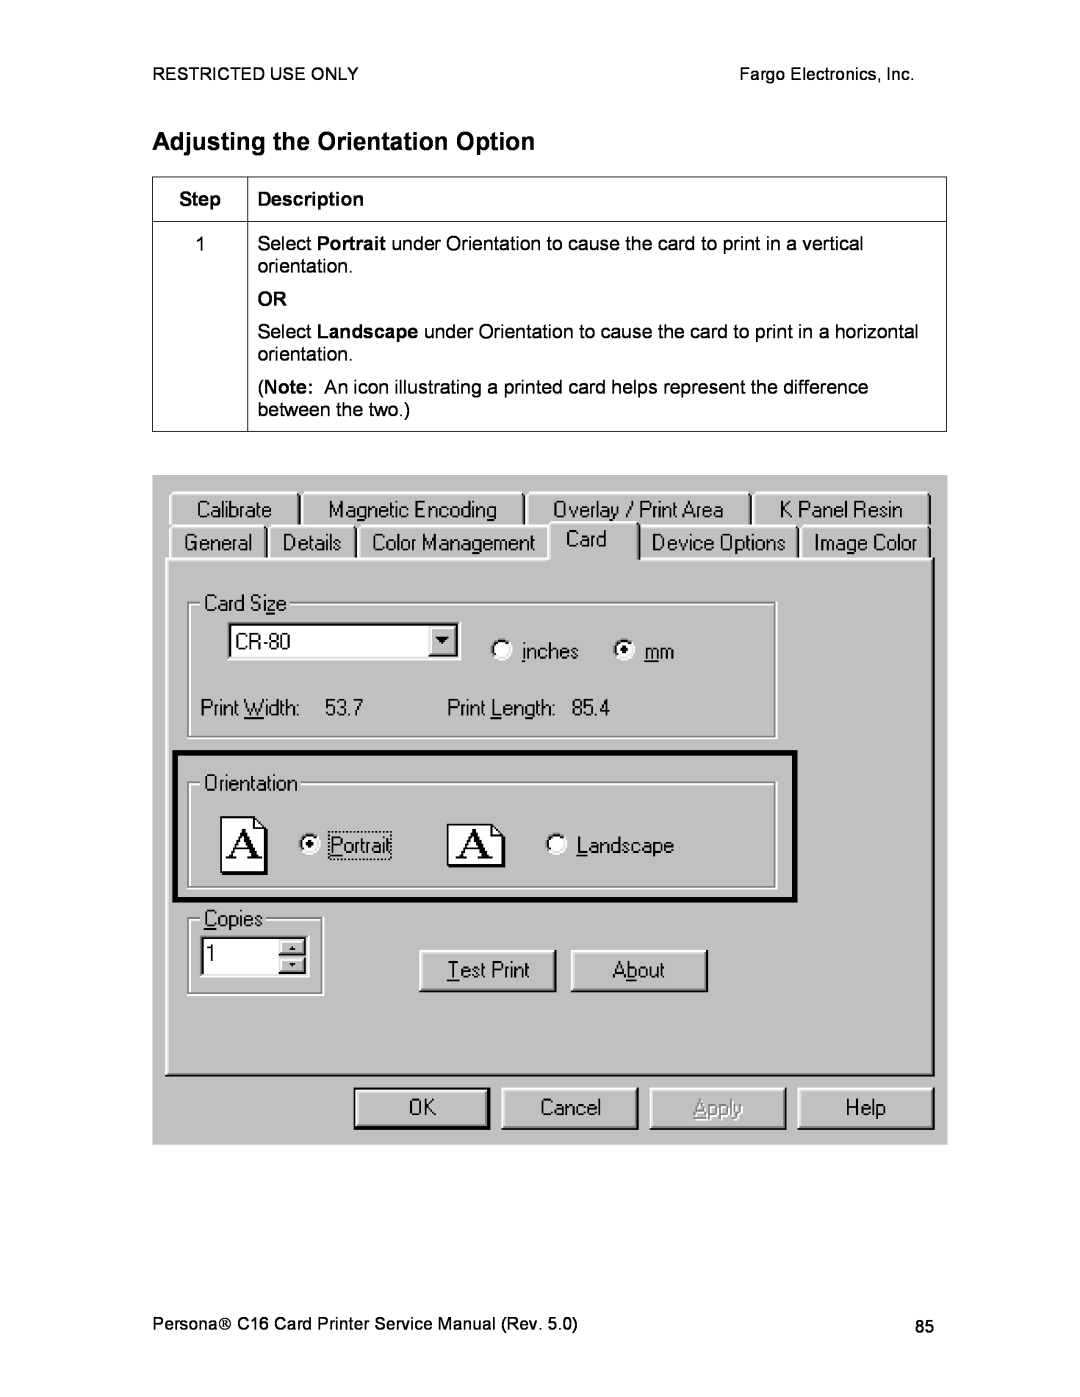 FARGO electronic C16 service manual Adjusting the Orientation Option 